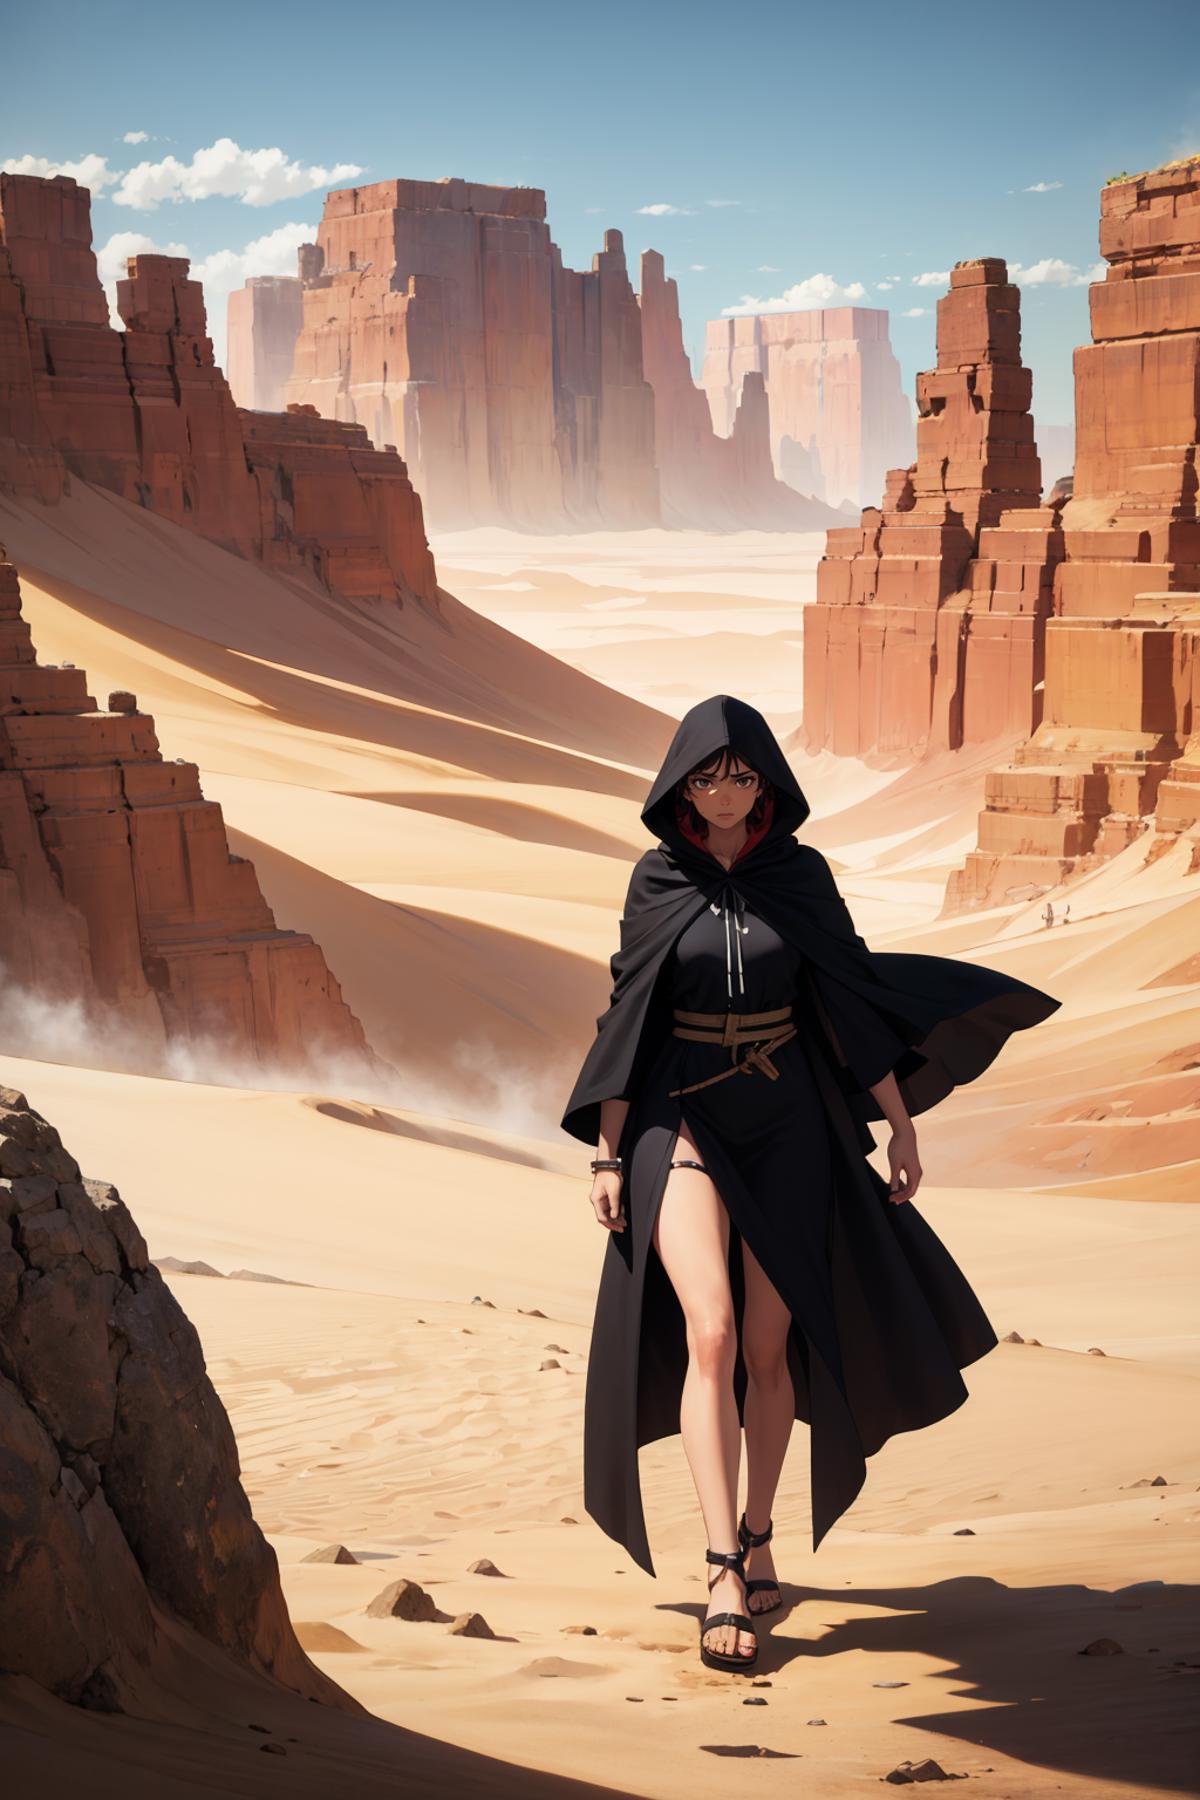 A woman in a black cloak walking through a sandy area.